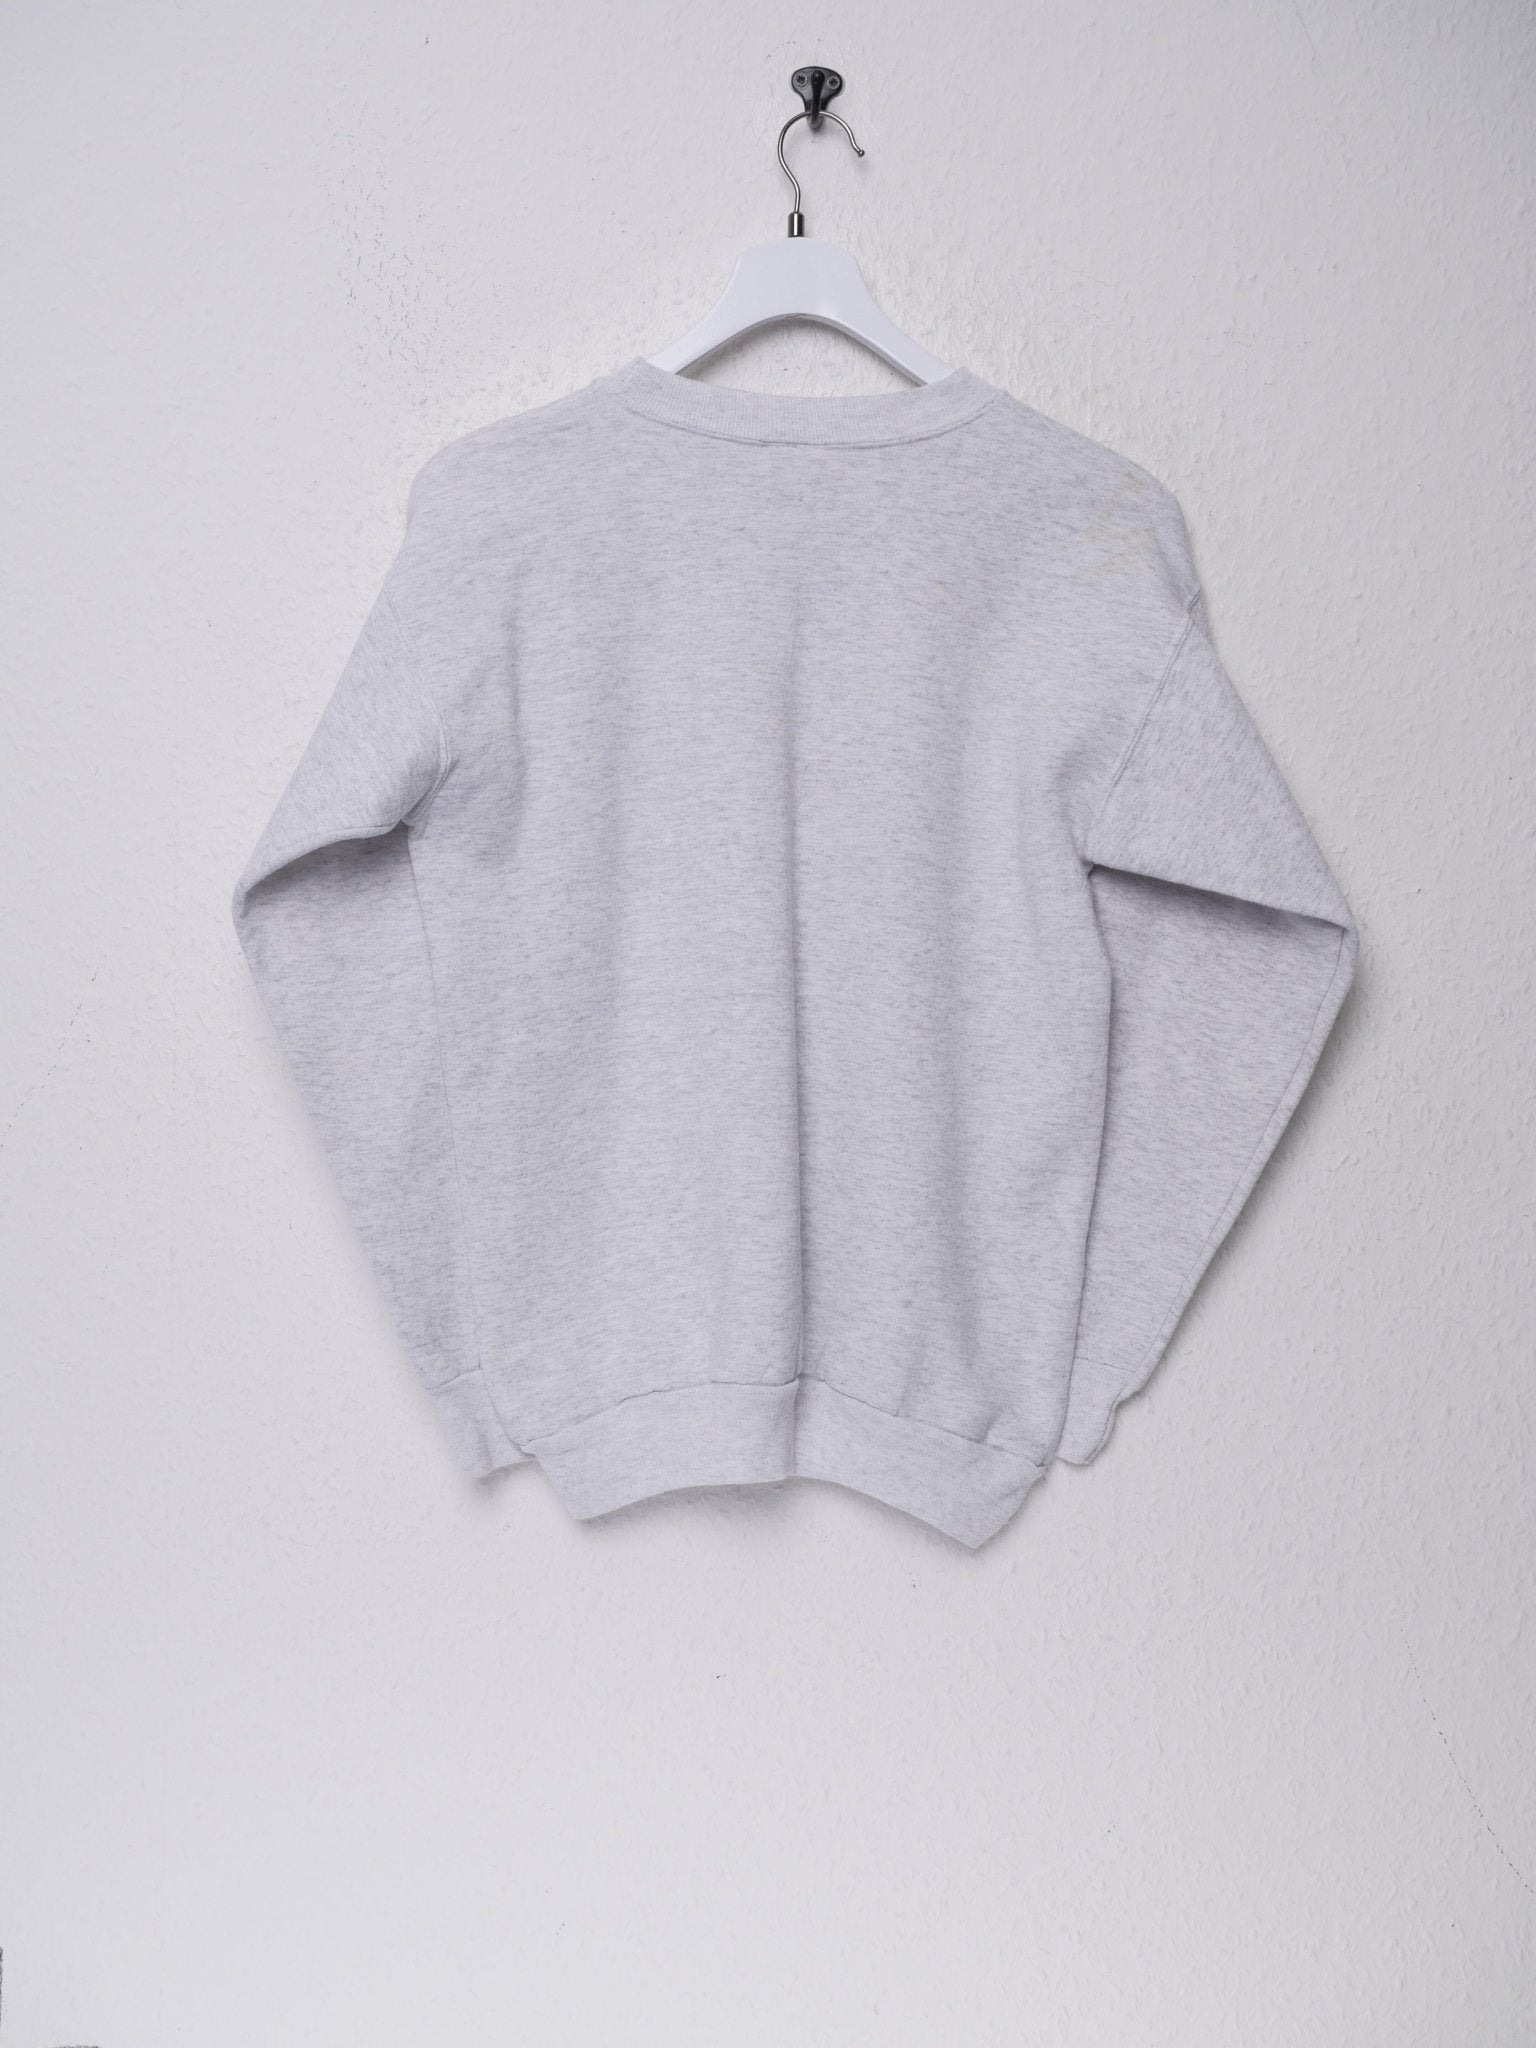 Prudhoe Bay Alaska printed Spellour grey Sweater - Peeces